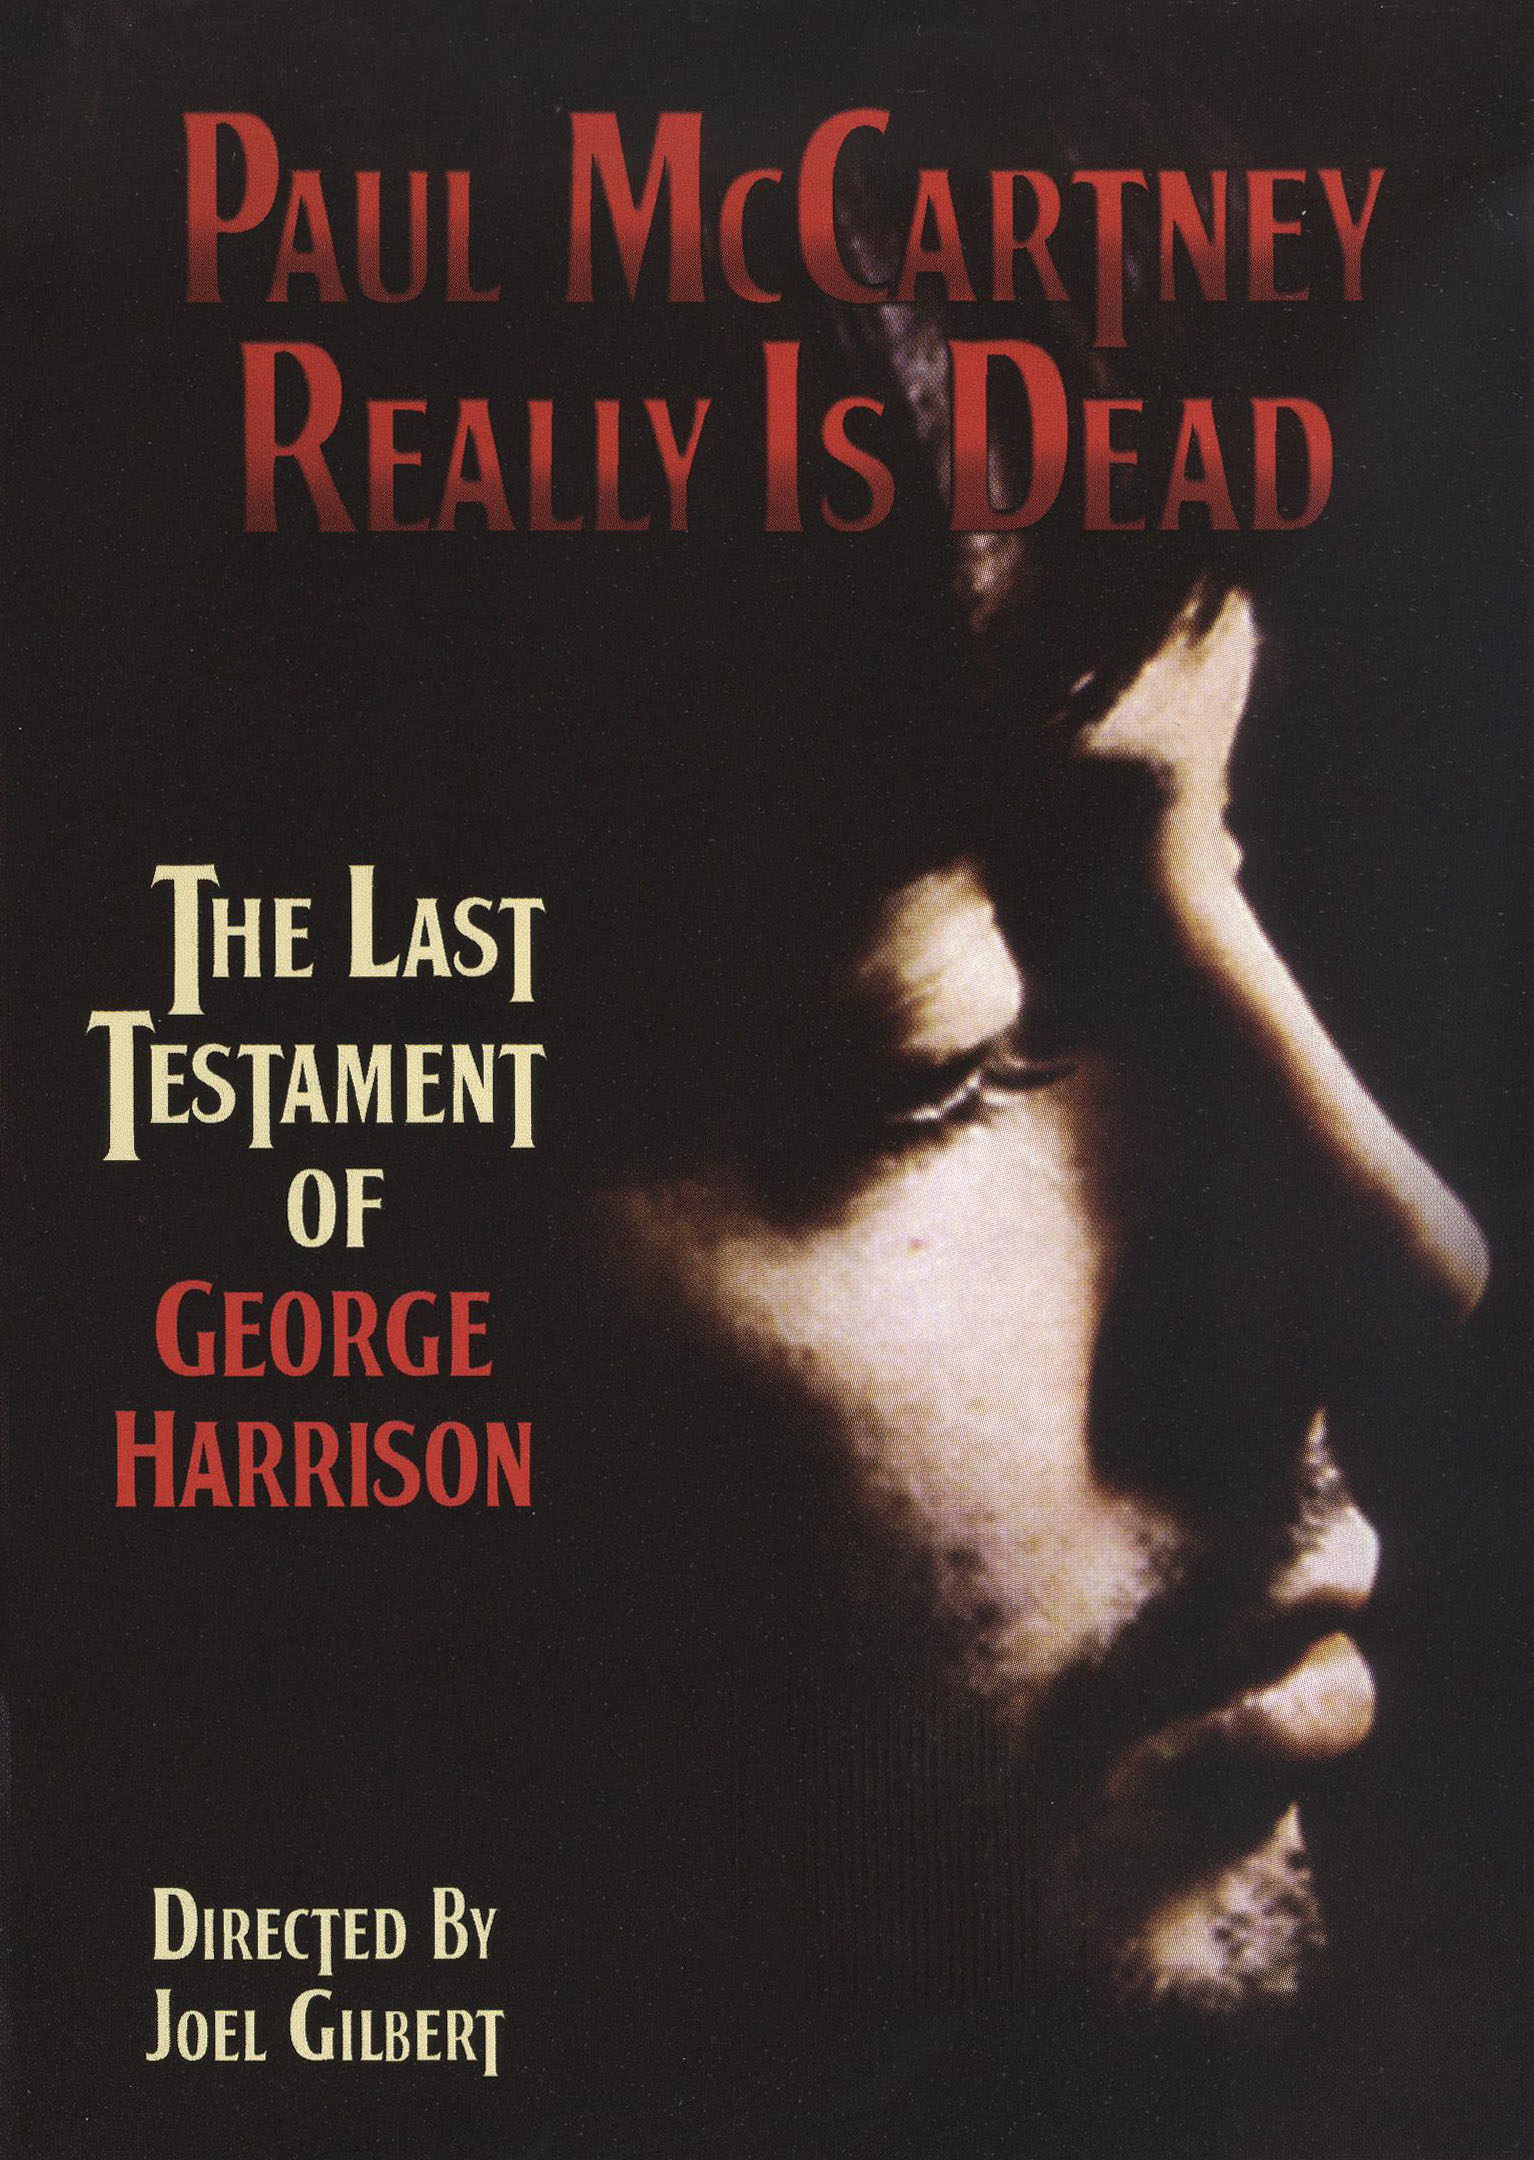 Paul McCartney Really is Dead: The Last Testament of George Harrison [2010]